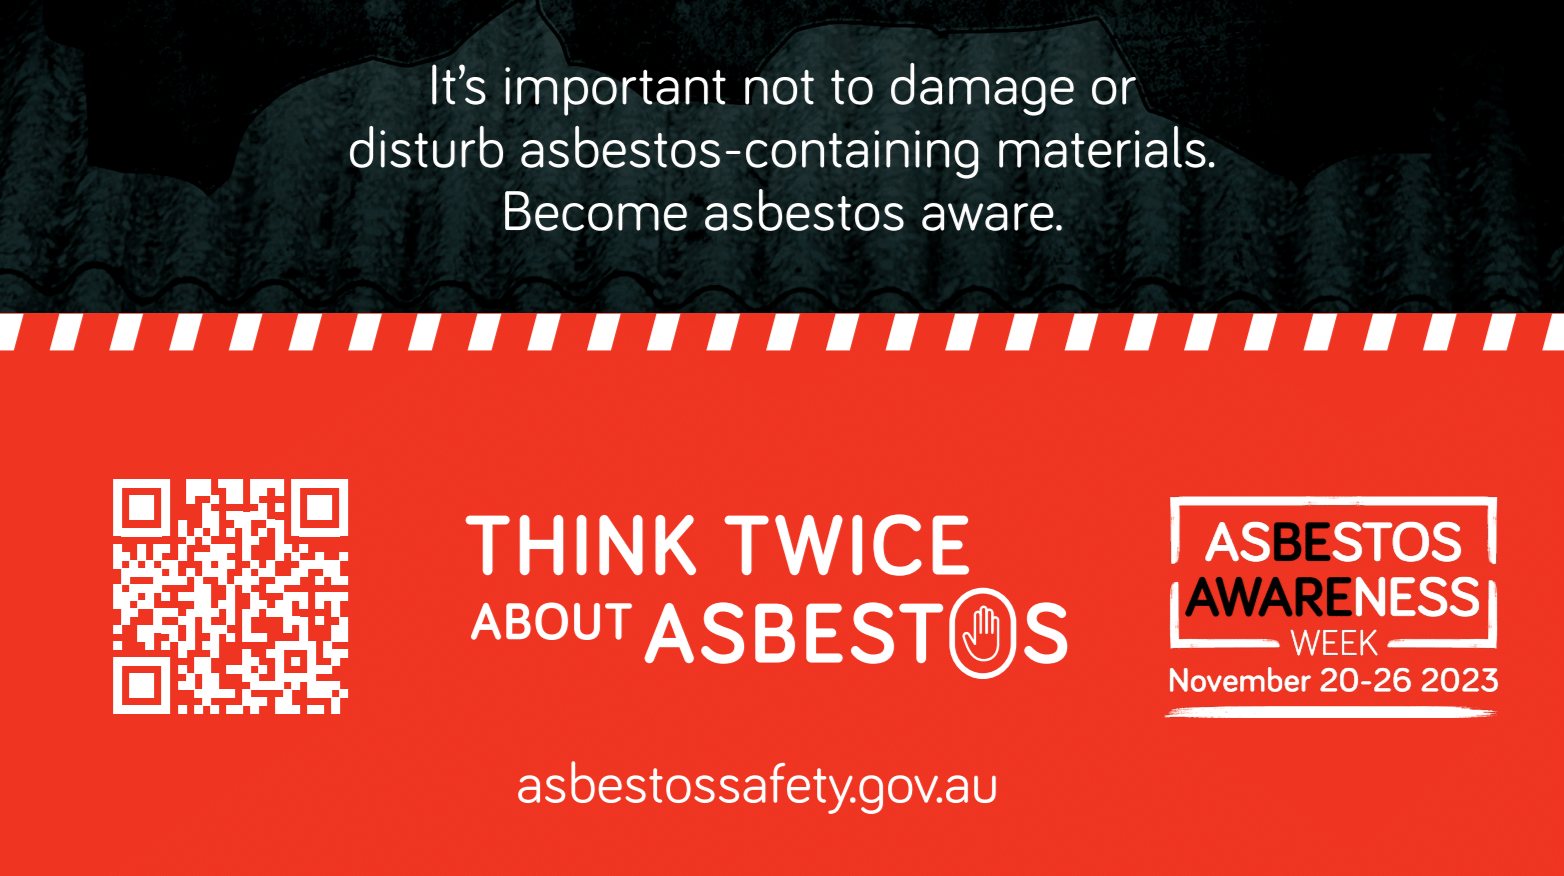 Asbestos-awareness-week-2023 - think twice